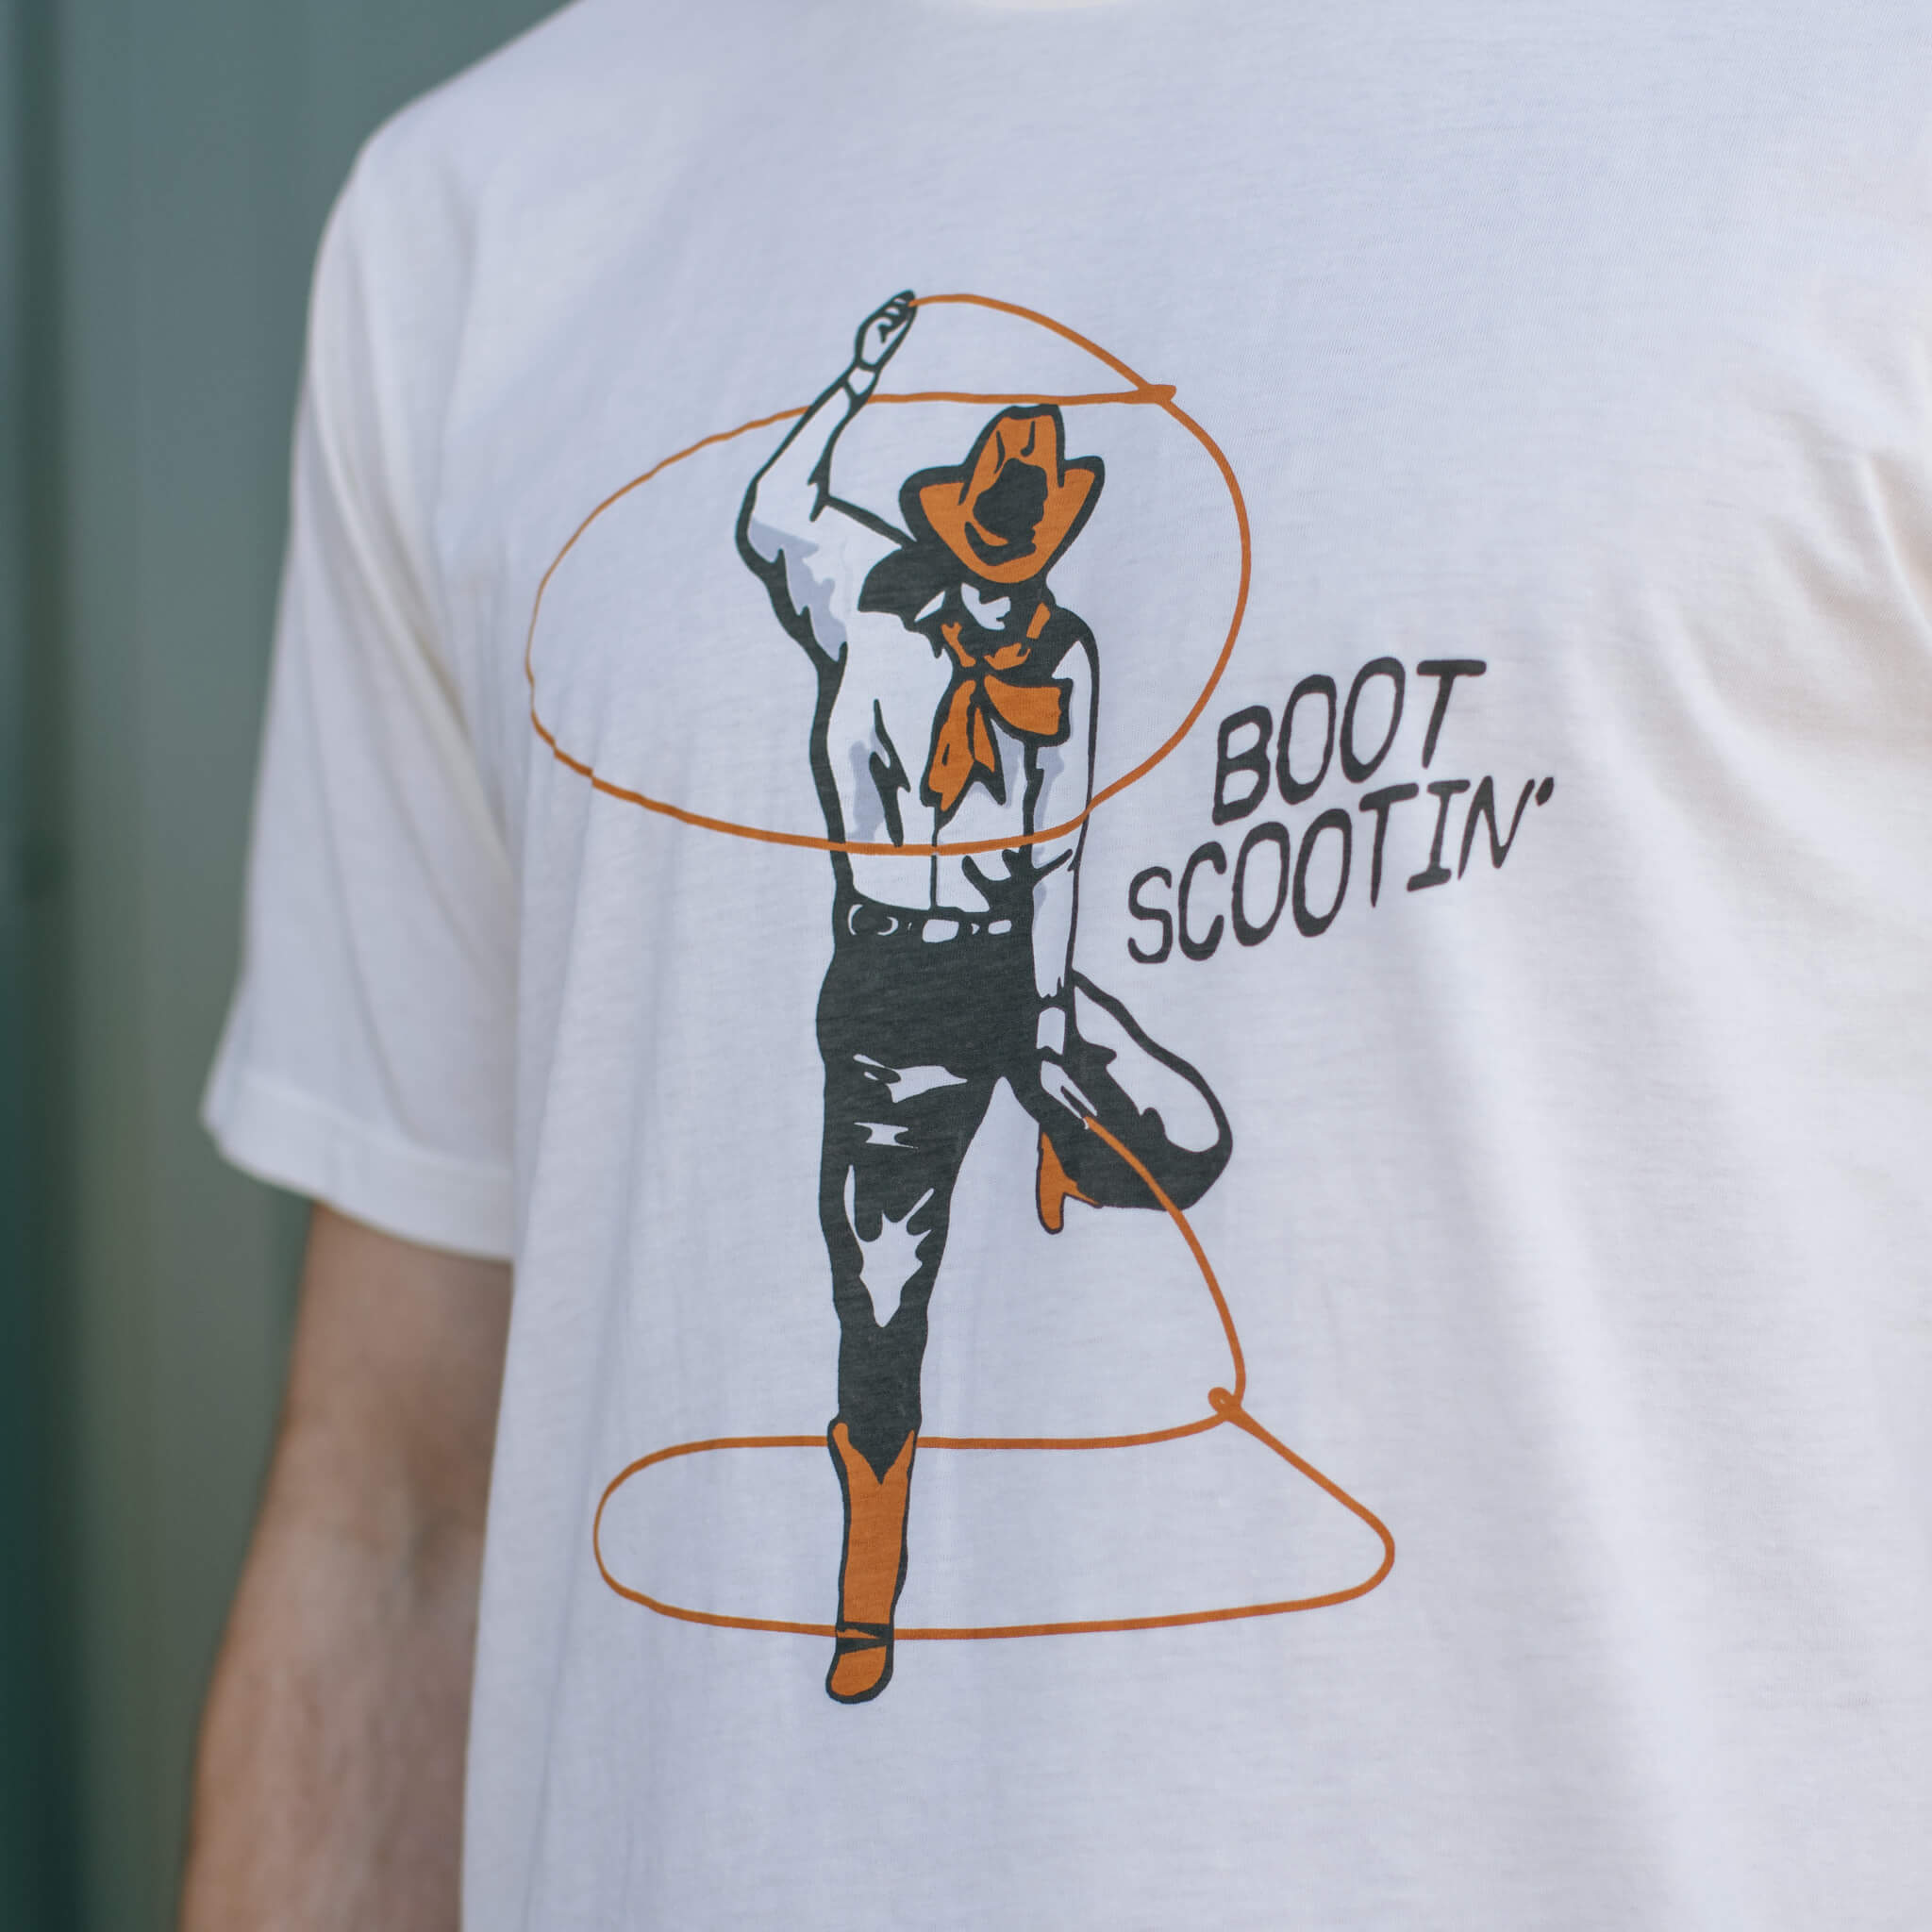 Boot Scootin' T-Shirt